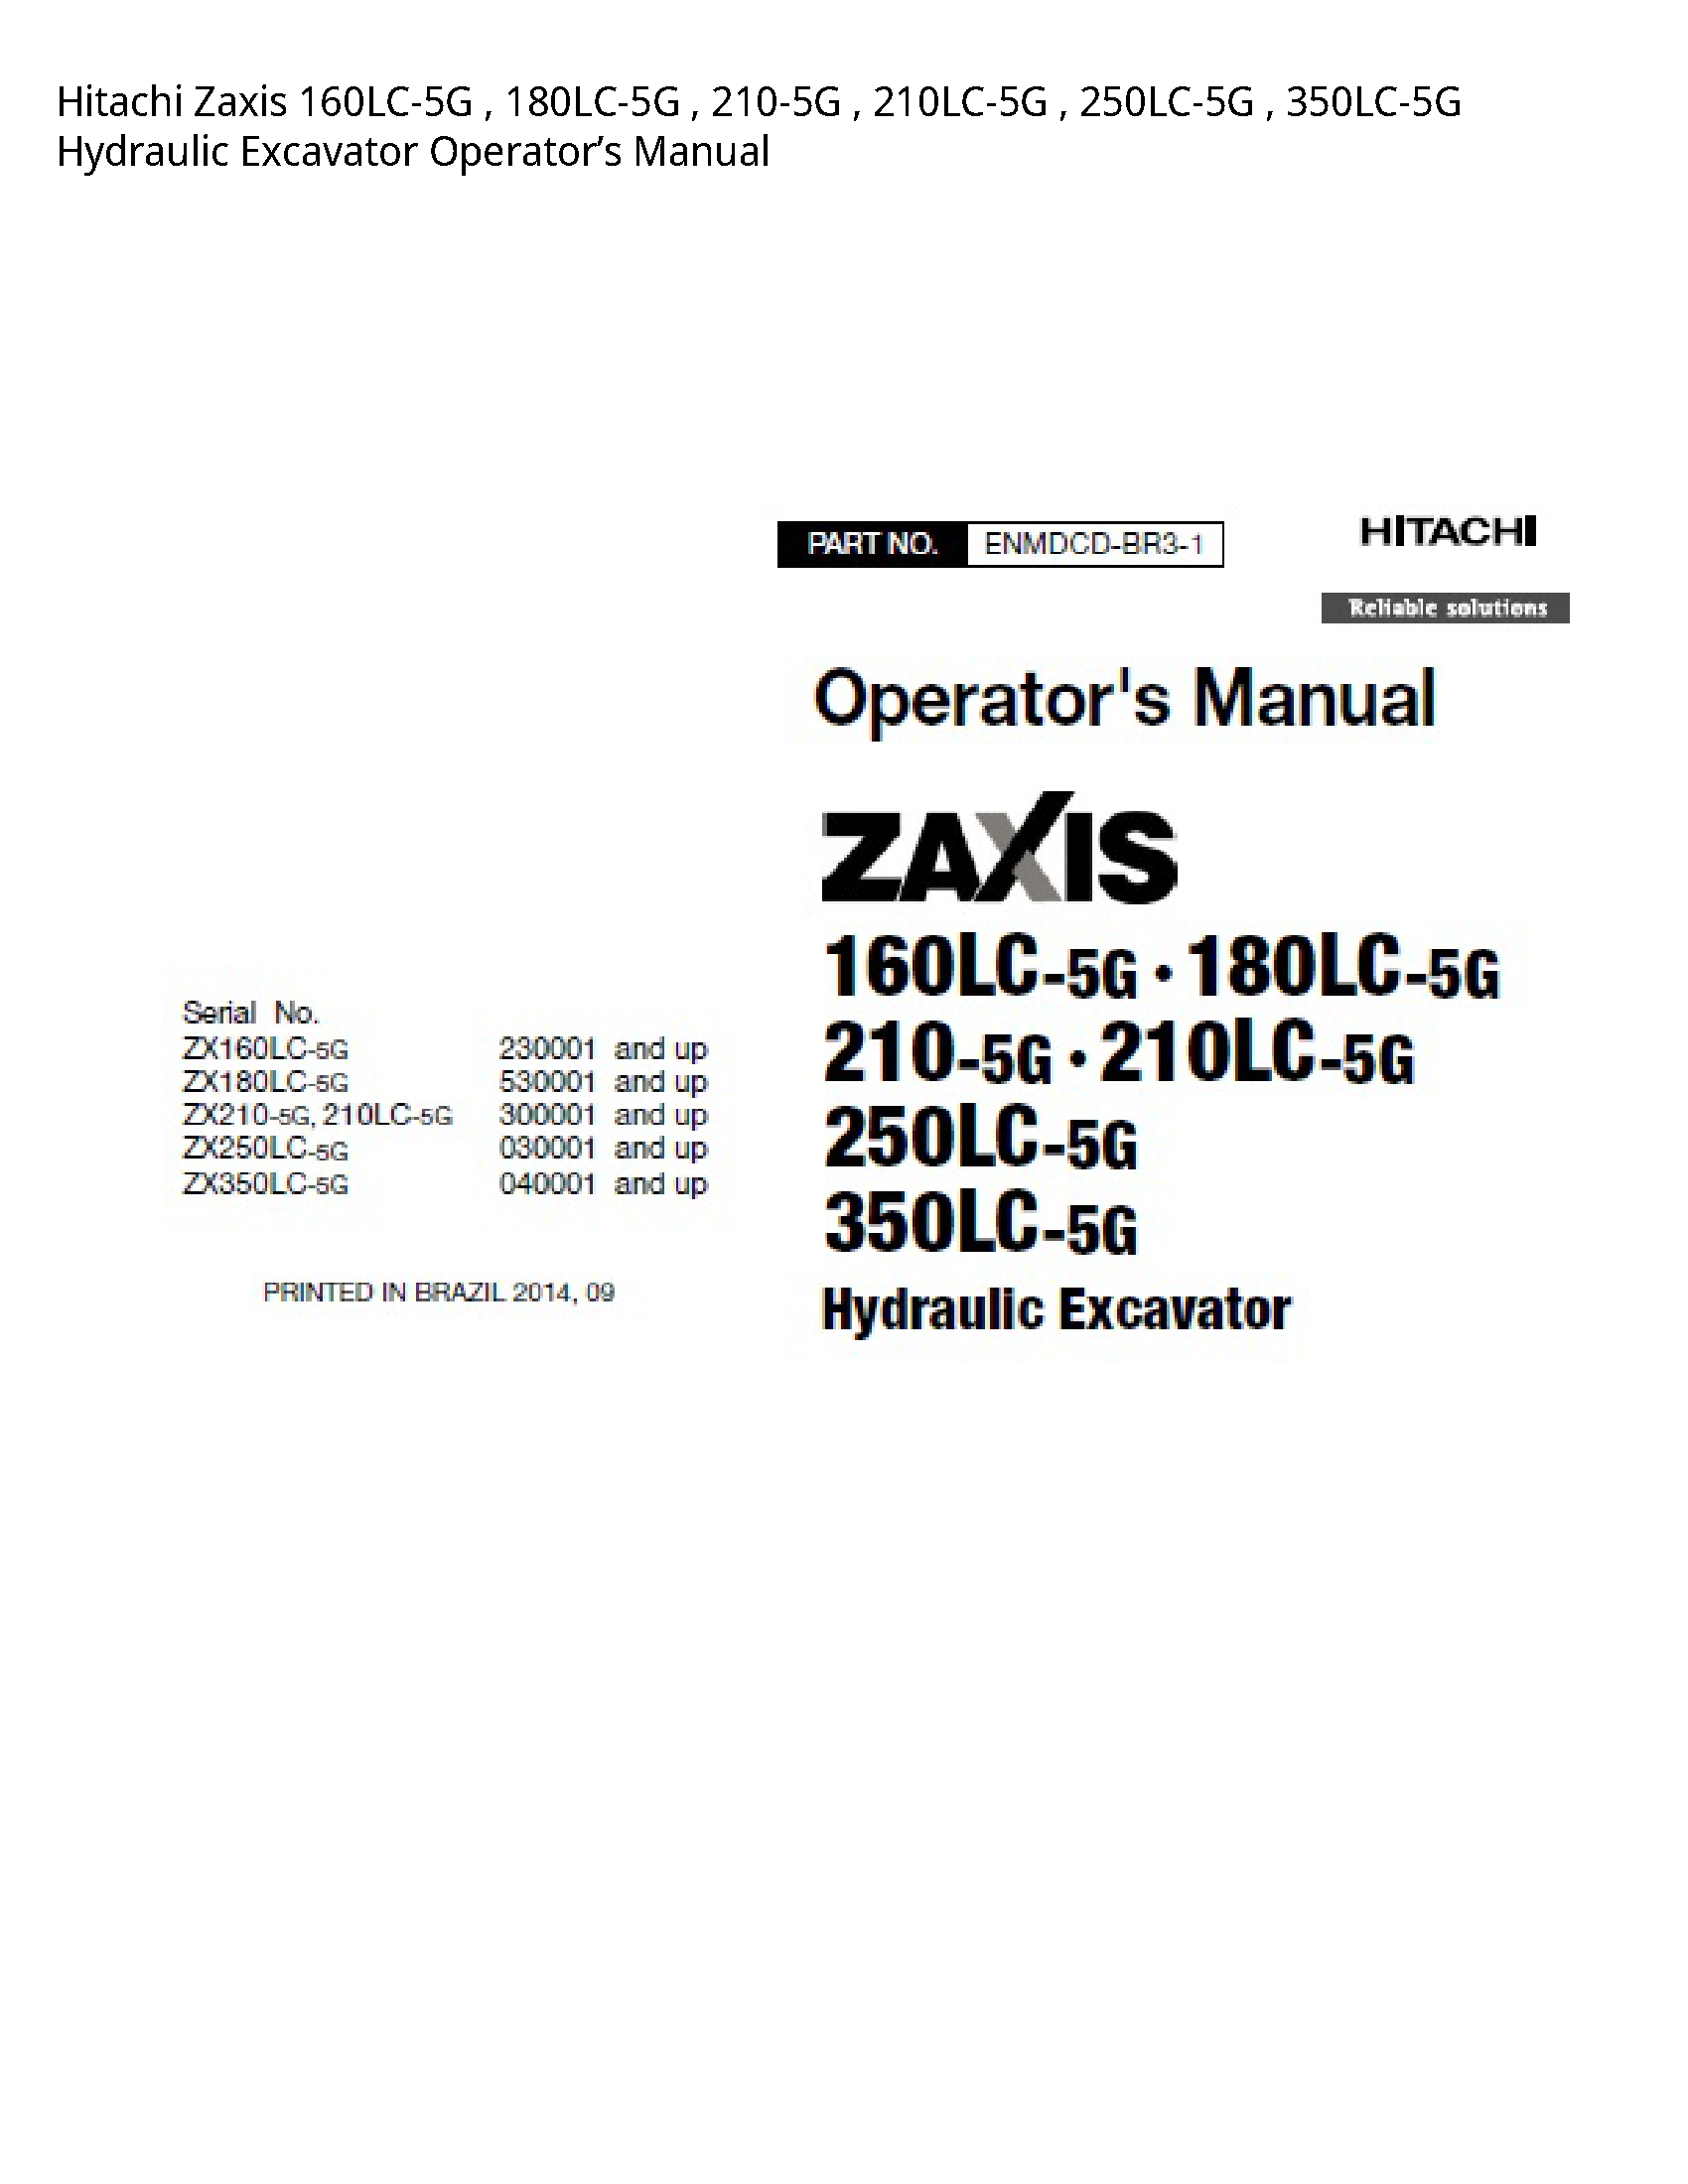 Hitachi 160LC-5G Zaxis Hydraulic Excavator Operator’s manual